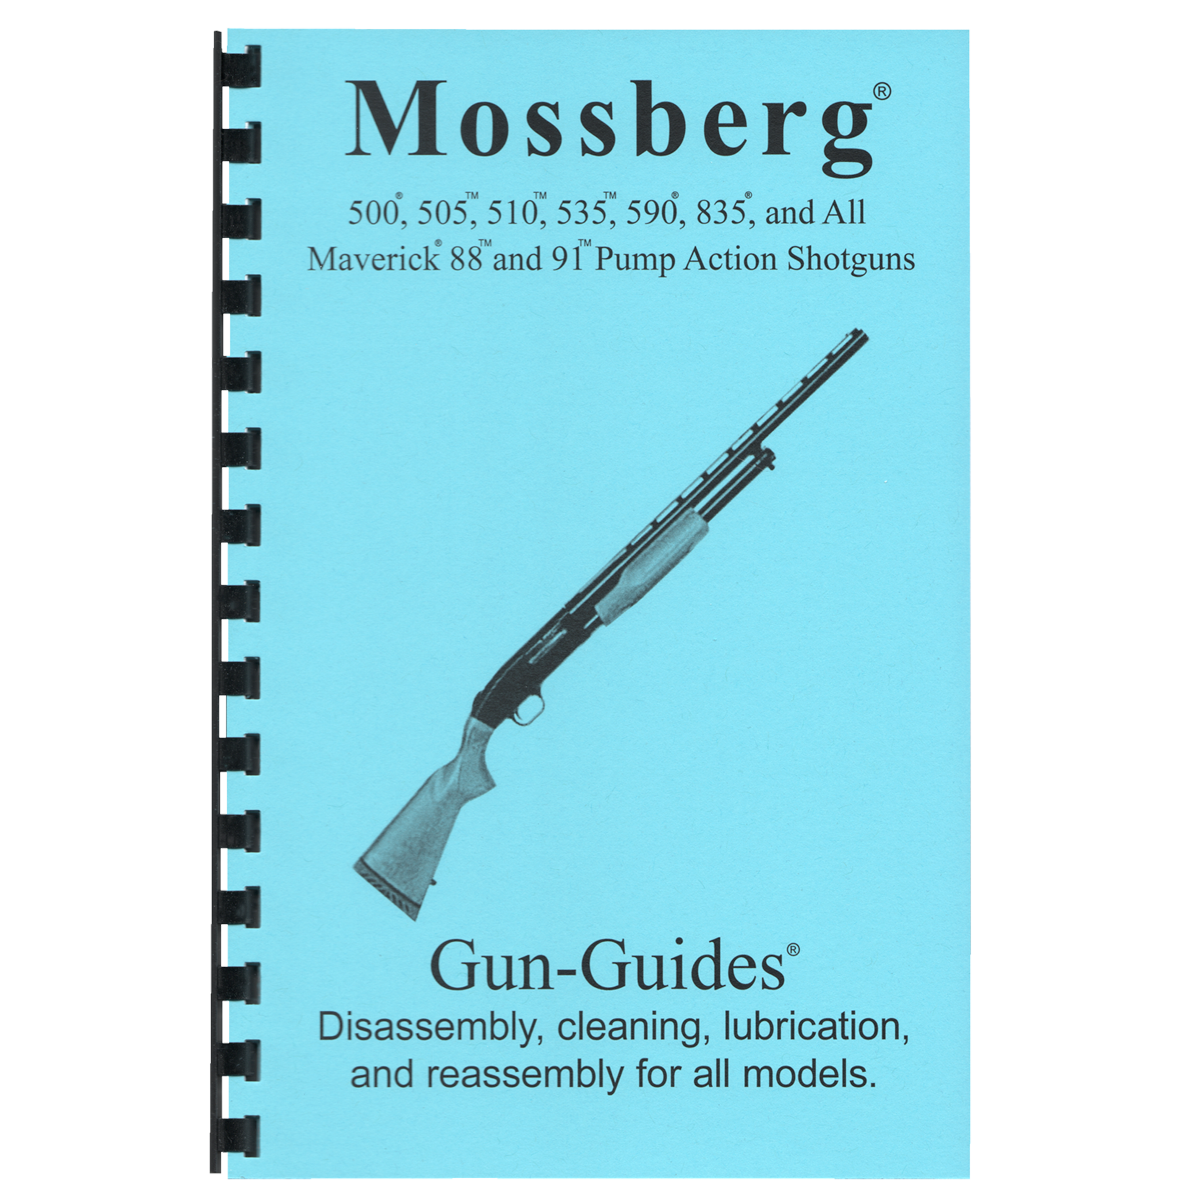 Mossberg Pump Action Shotguns Gun-Guides® Disassembly &amp; Reassembly for All Models